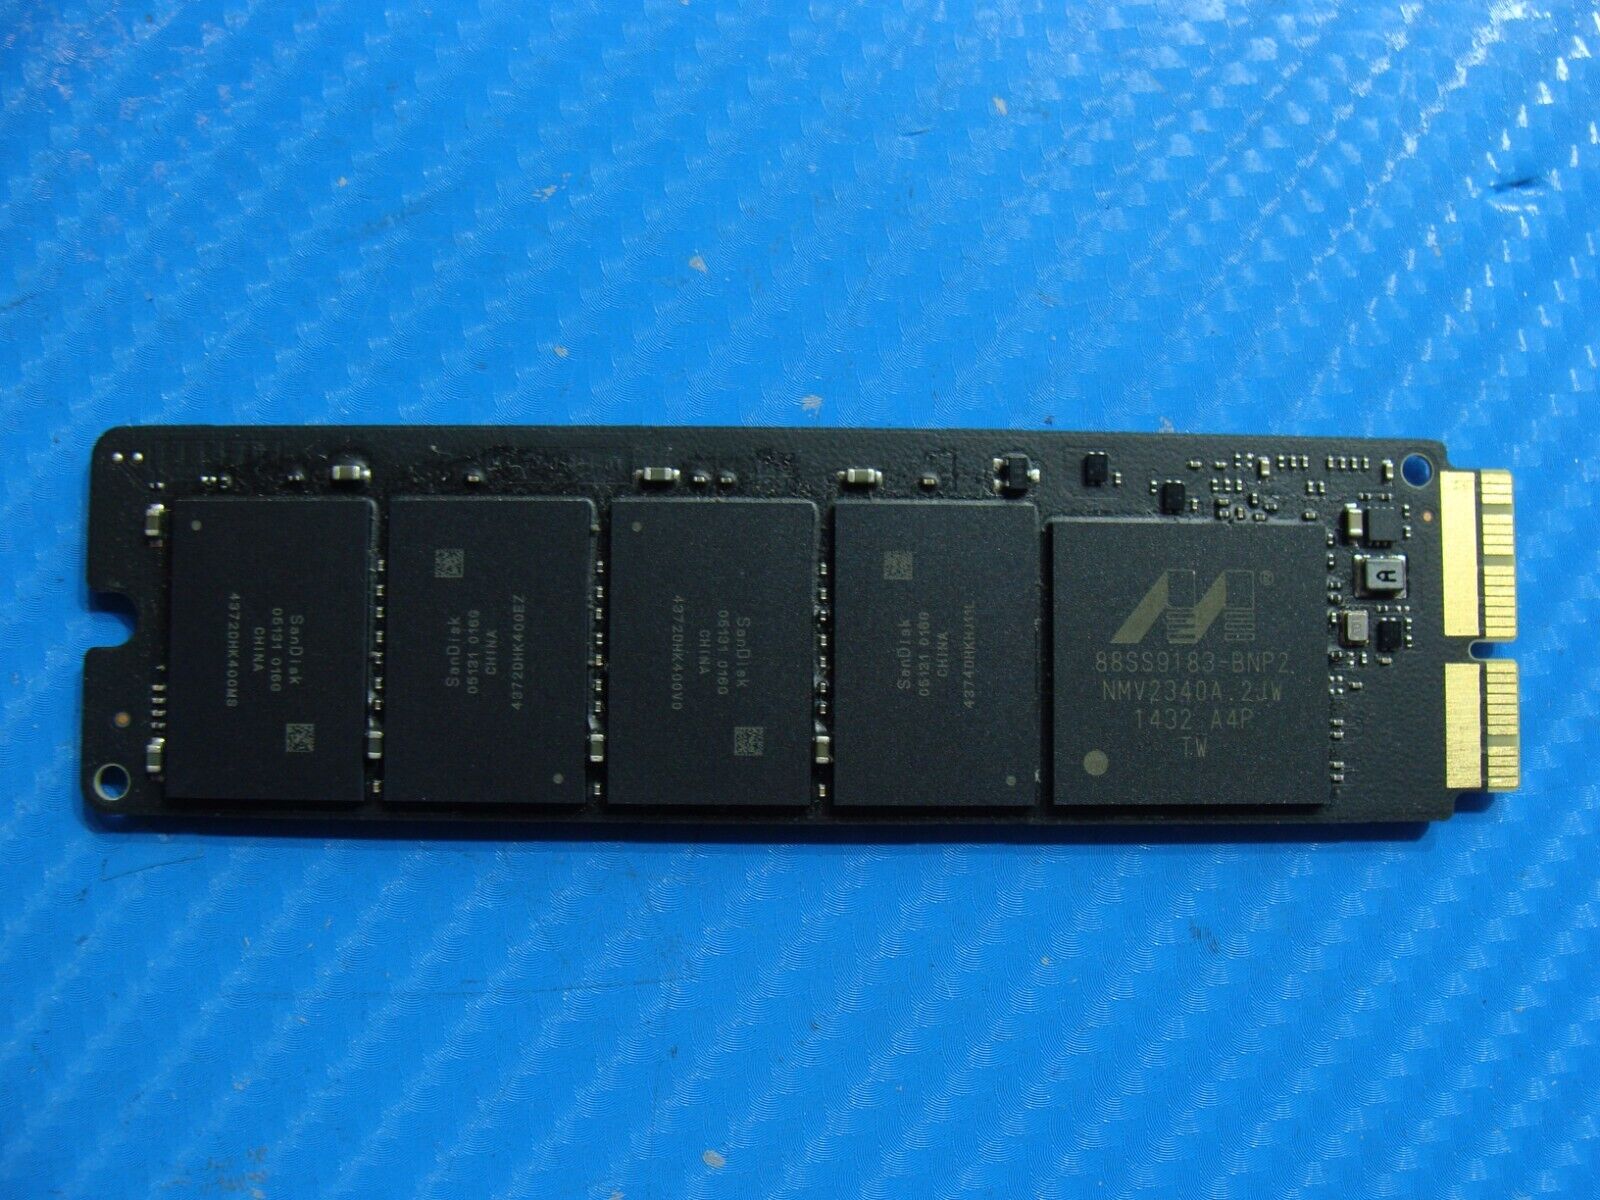 iMac A1419 SanDisk 128GB SATA M.2 SSD Solid State Drive SD6PQ4M-128G-1021L